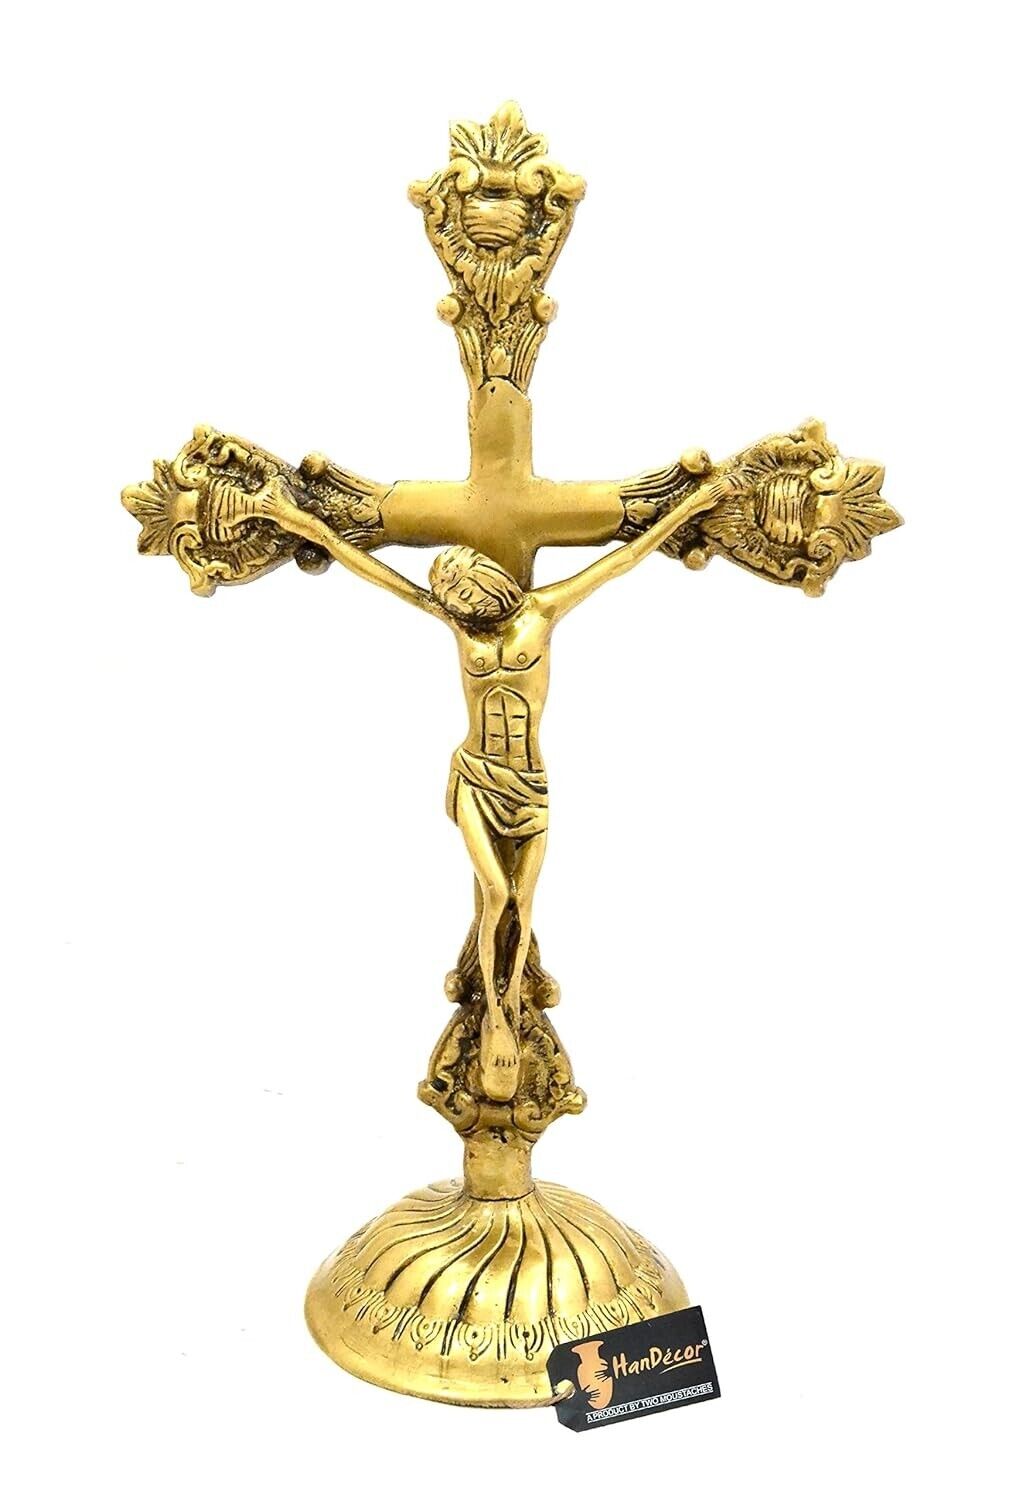 Handmade Brass Lord Jesus On Holy Cross Statue Figurine Antique Yellow